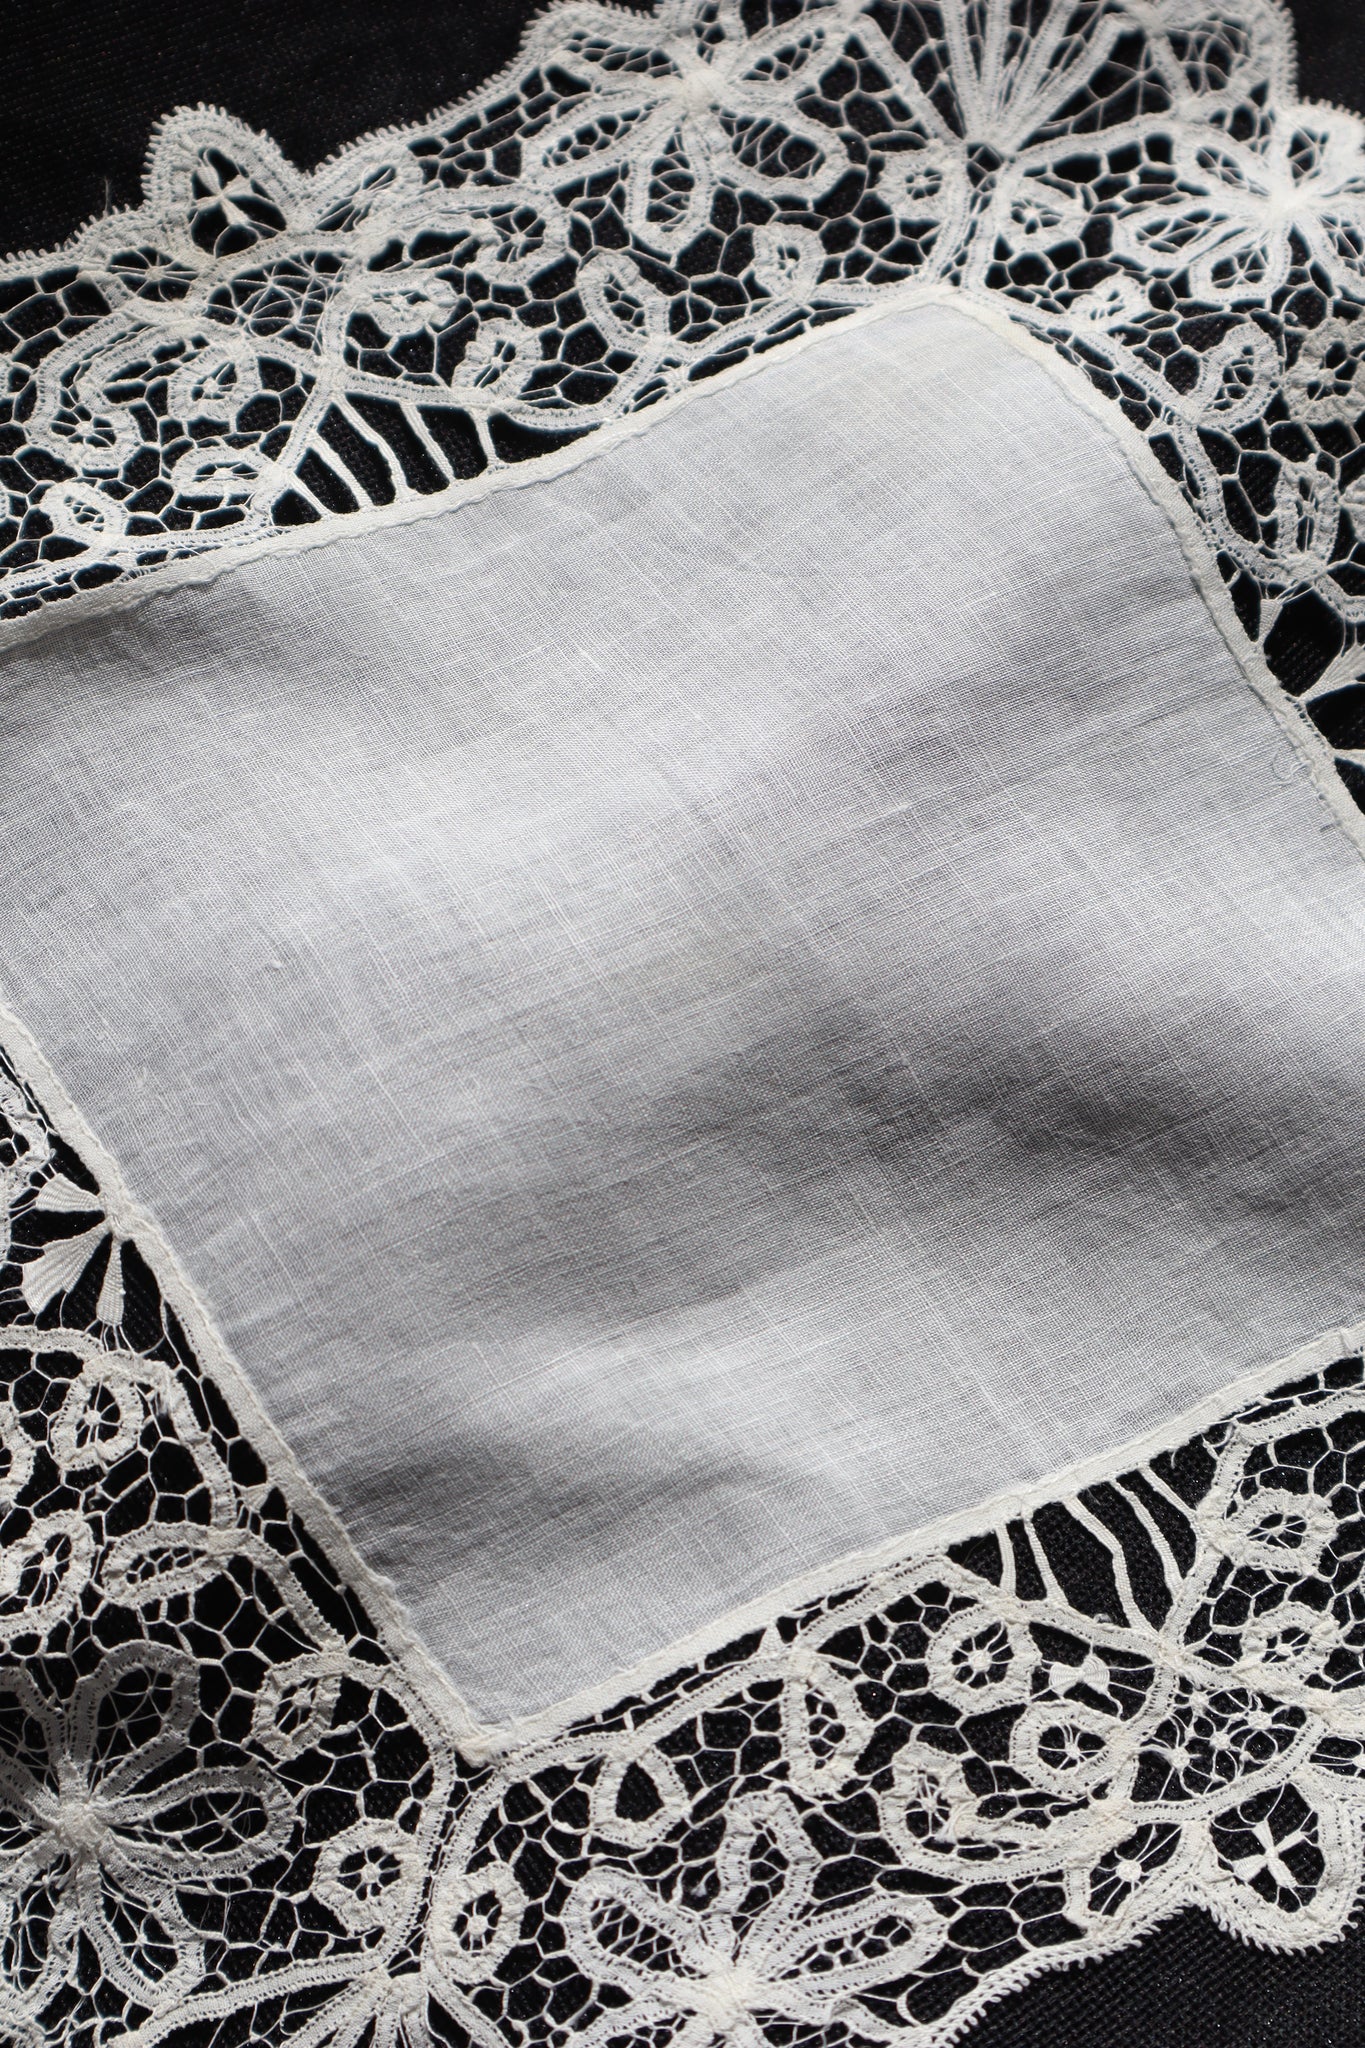 19th Antique Handkerchief A